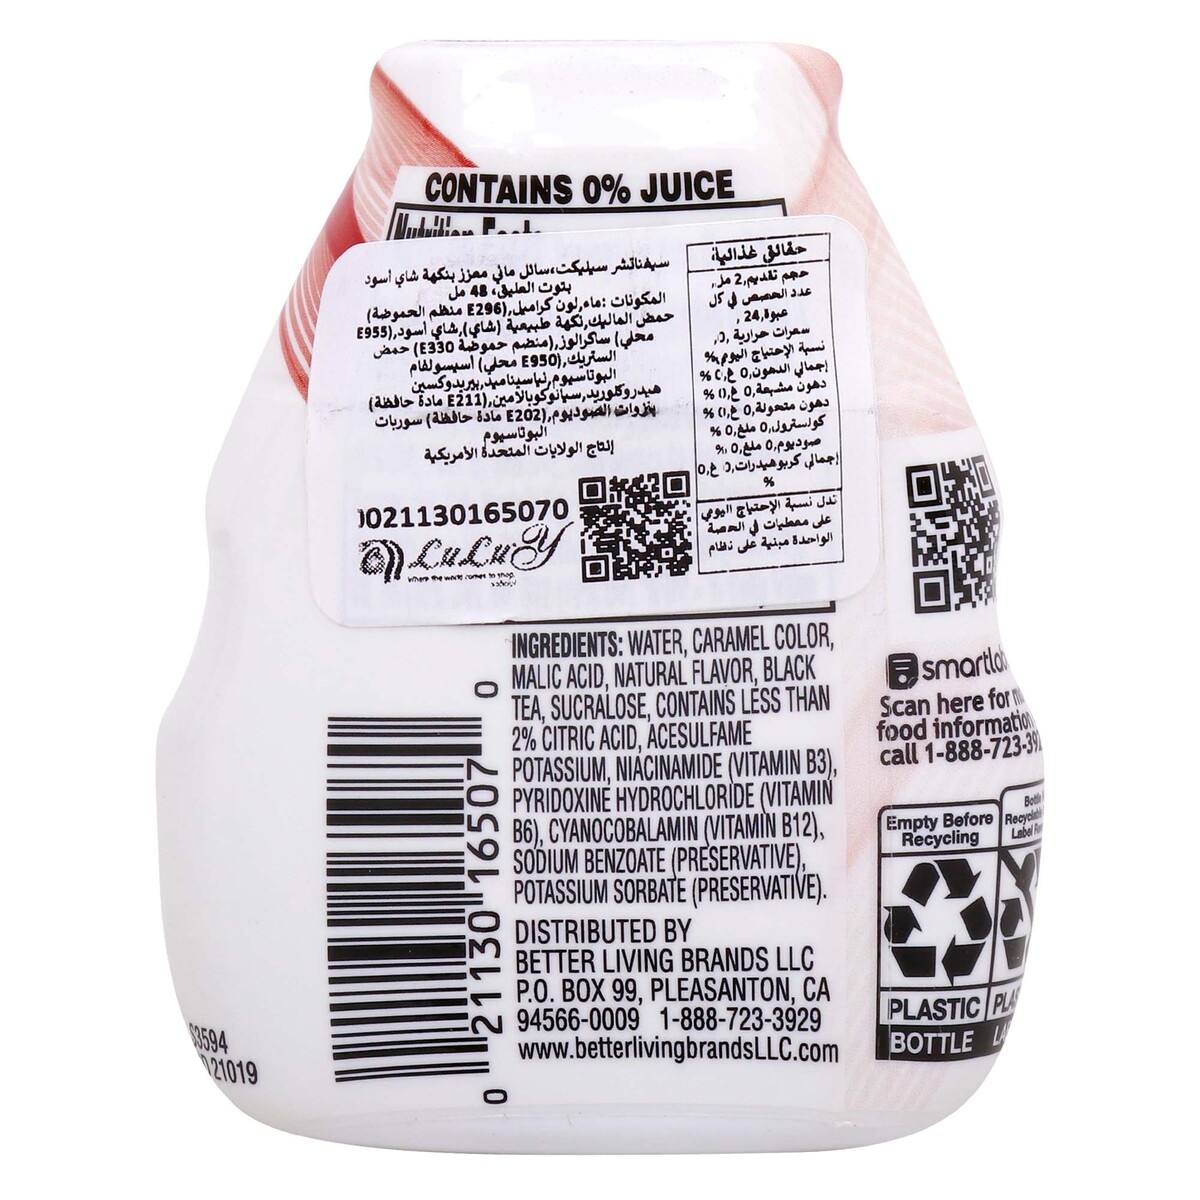 Signature Select Raspberry Black Tea Liquid Water Enhancer, 48 ml